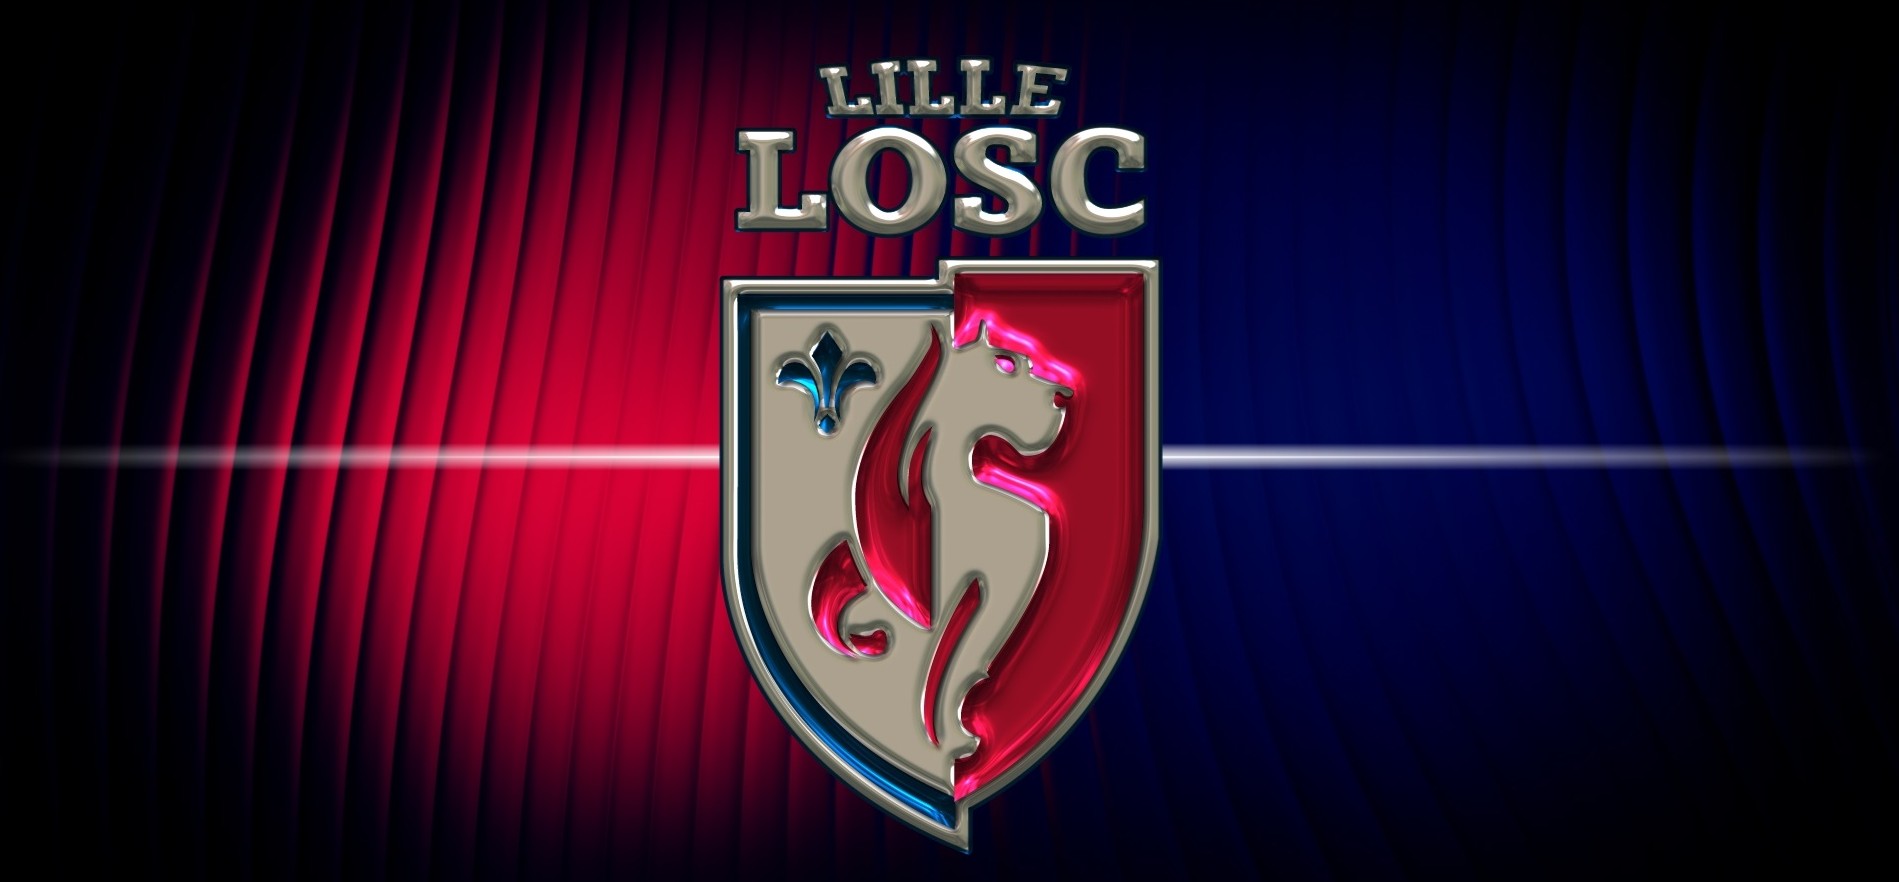 LOSC Lille Symbol Wallpaper